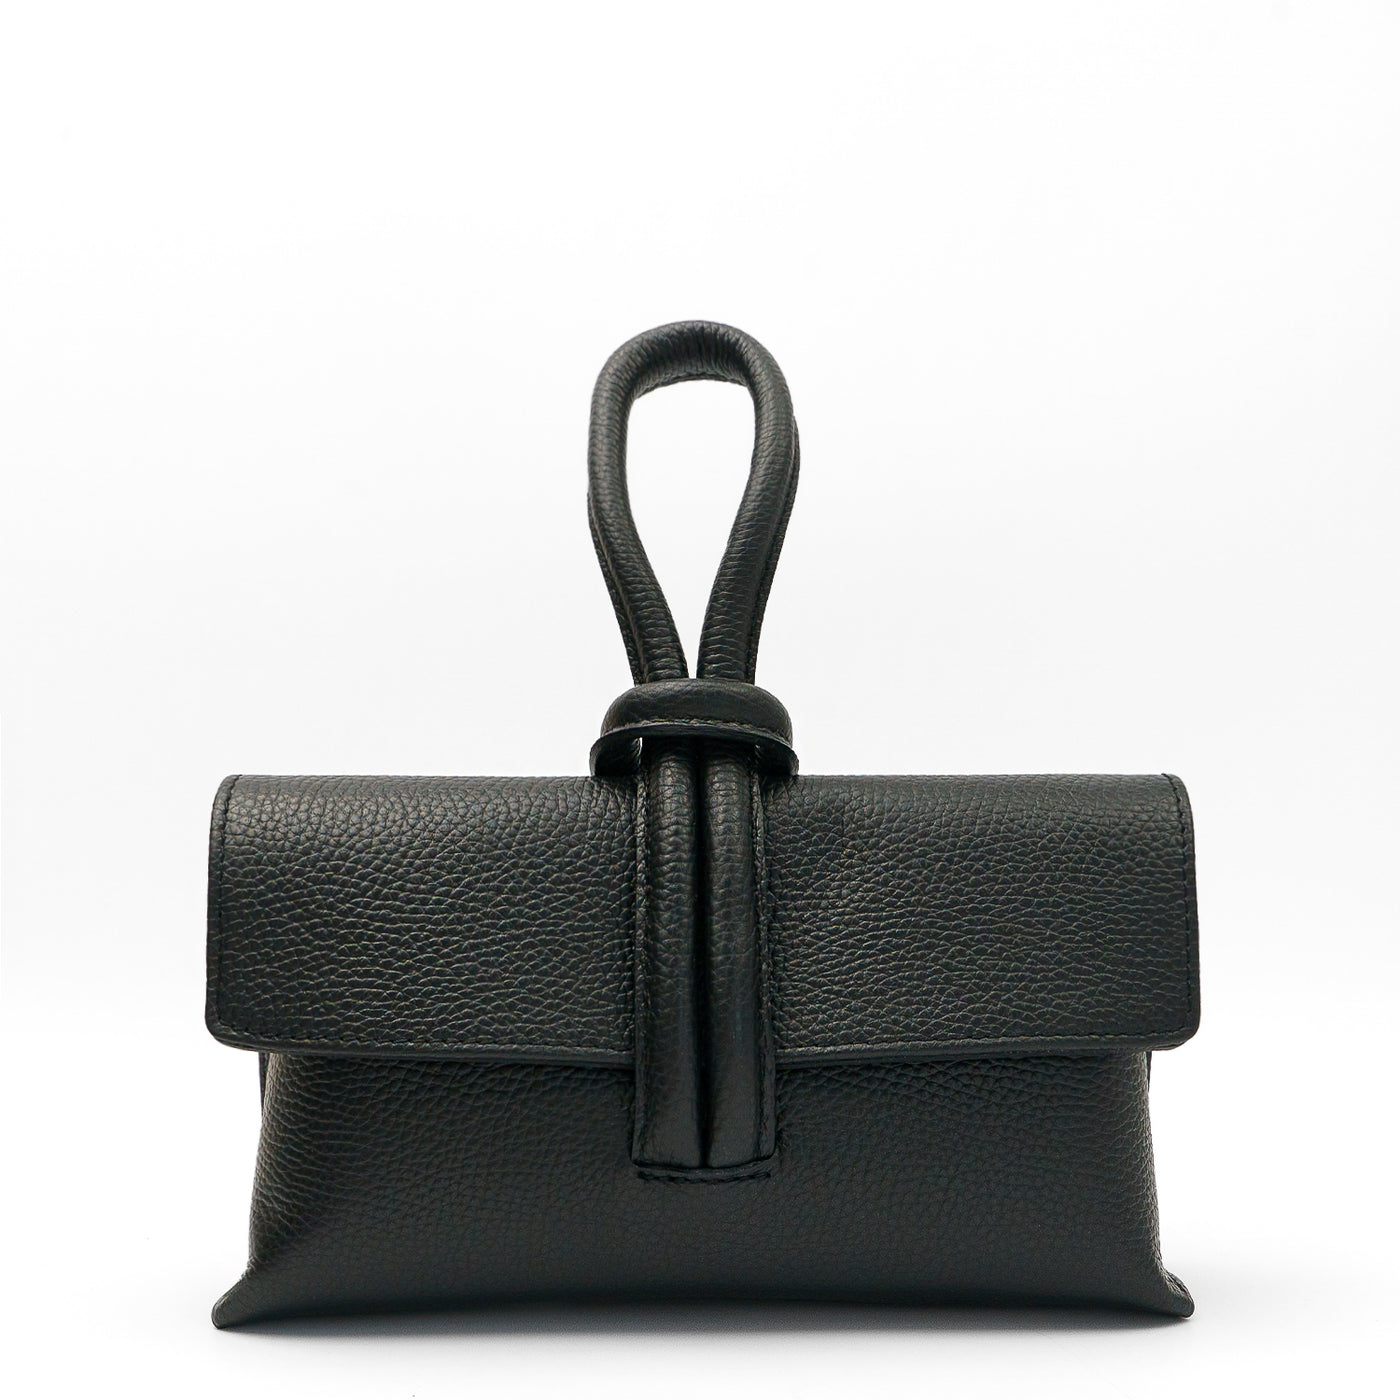 Leather bag "Barletta", Black